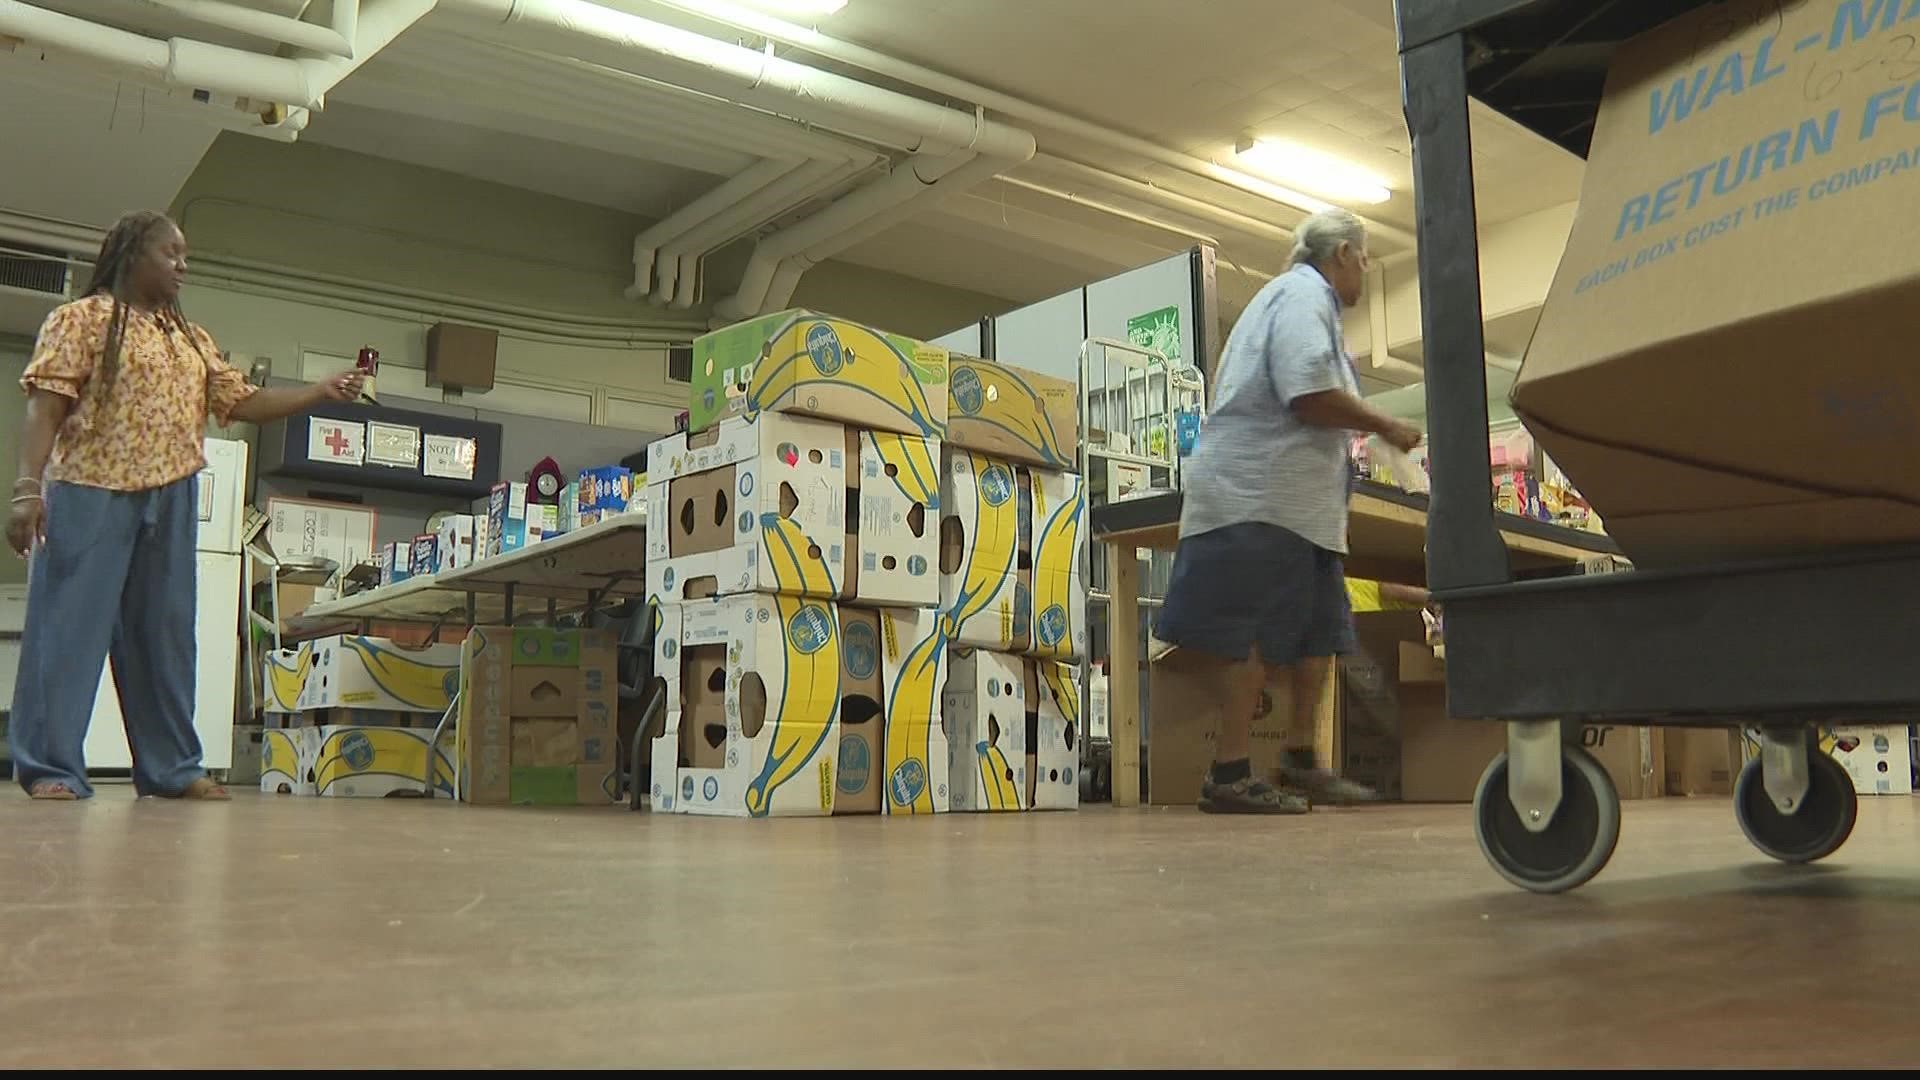 Atlanta emergency food bank in danger of closing, looking for new warehouse space